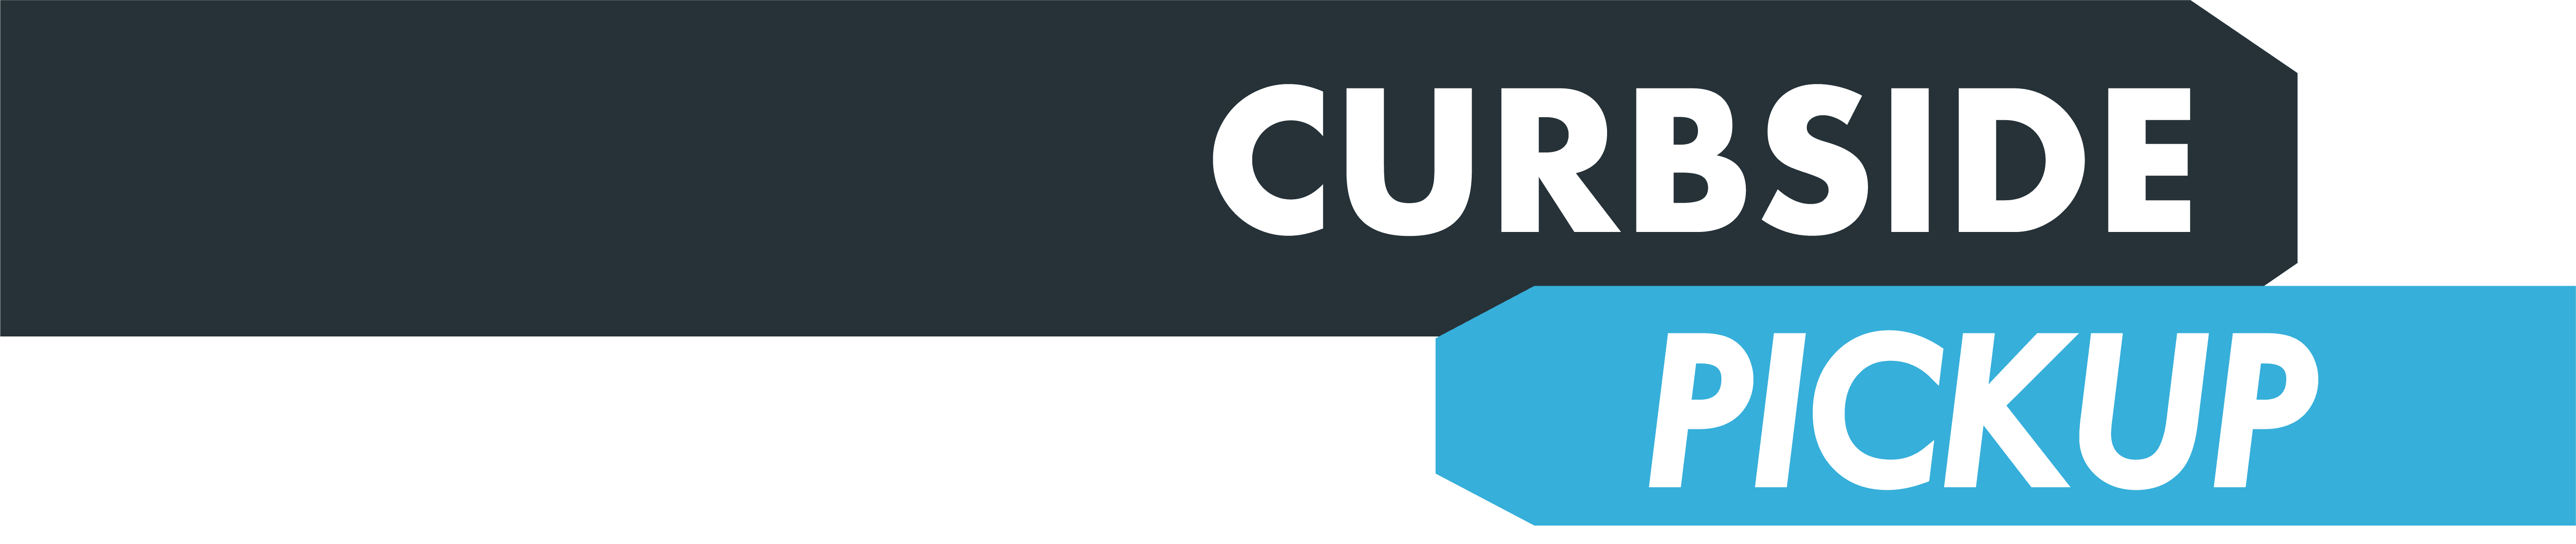 Curbside-Pickup-Color-Blocks